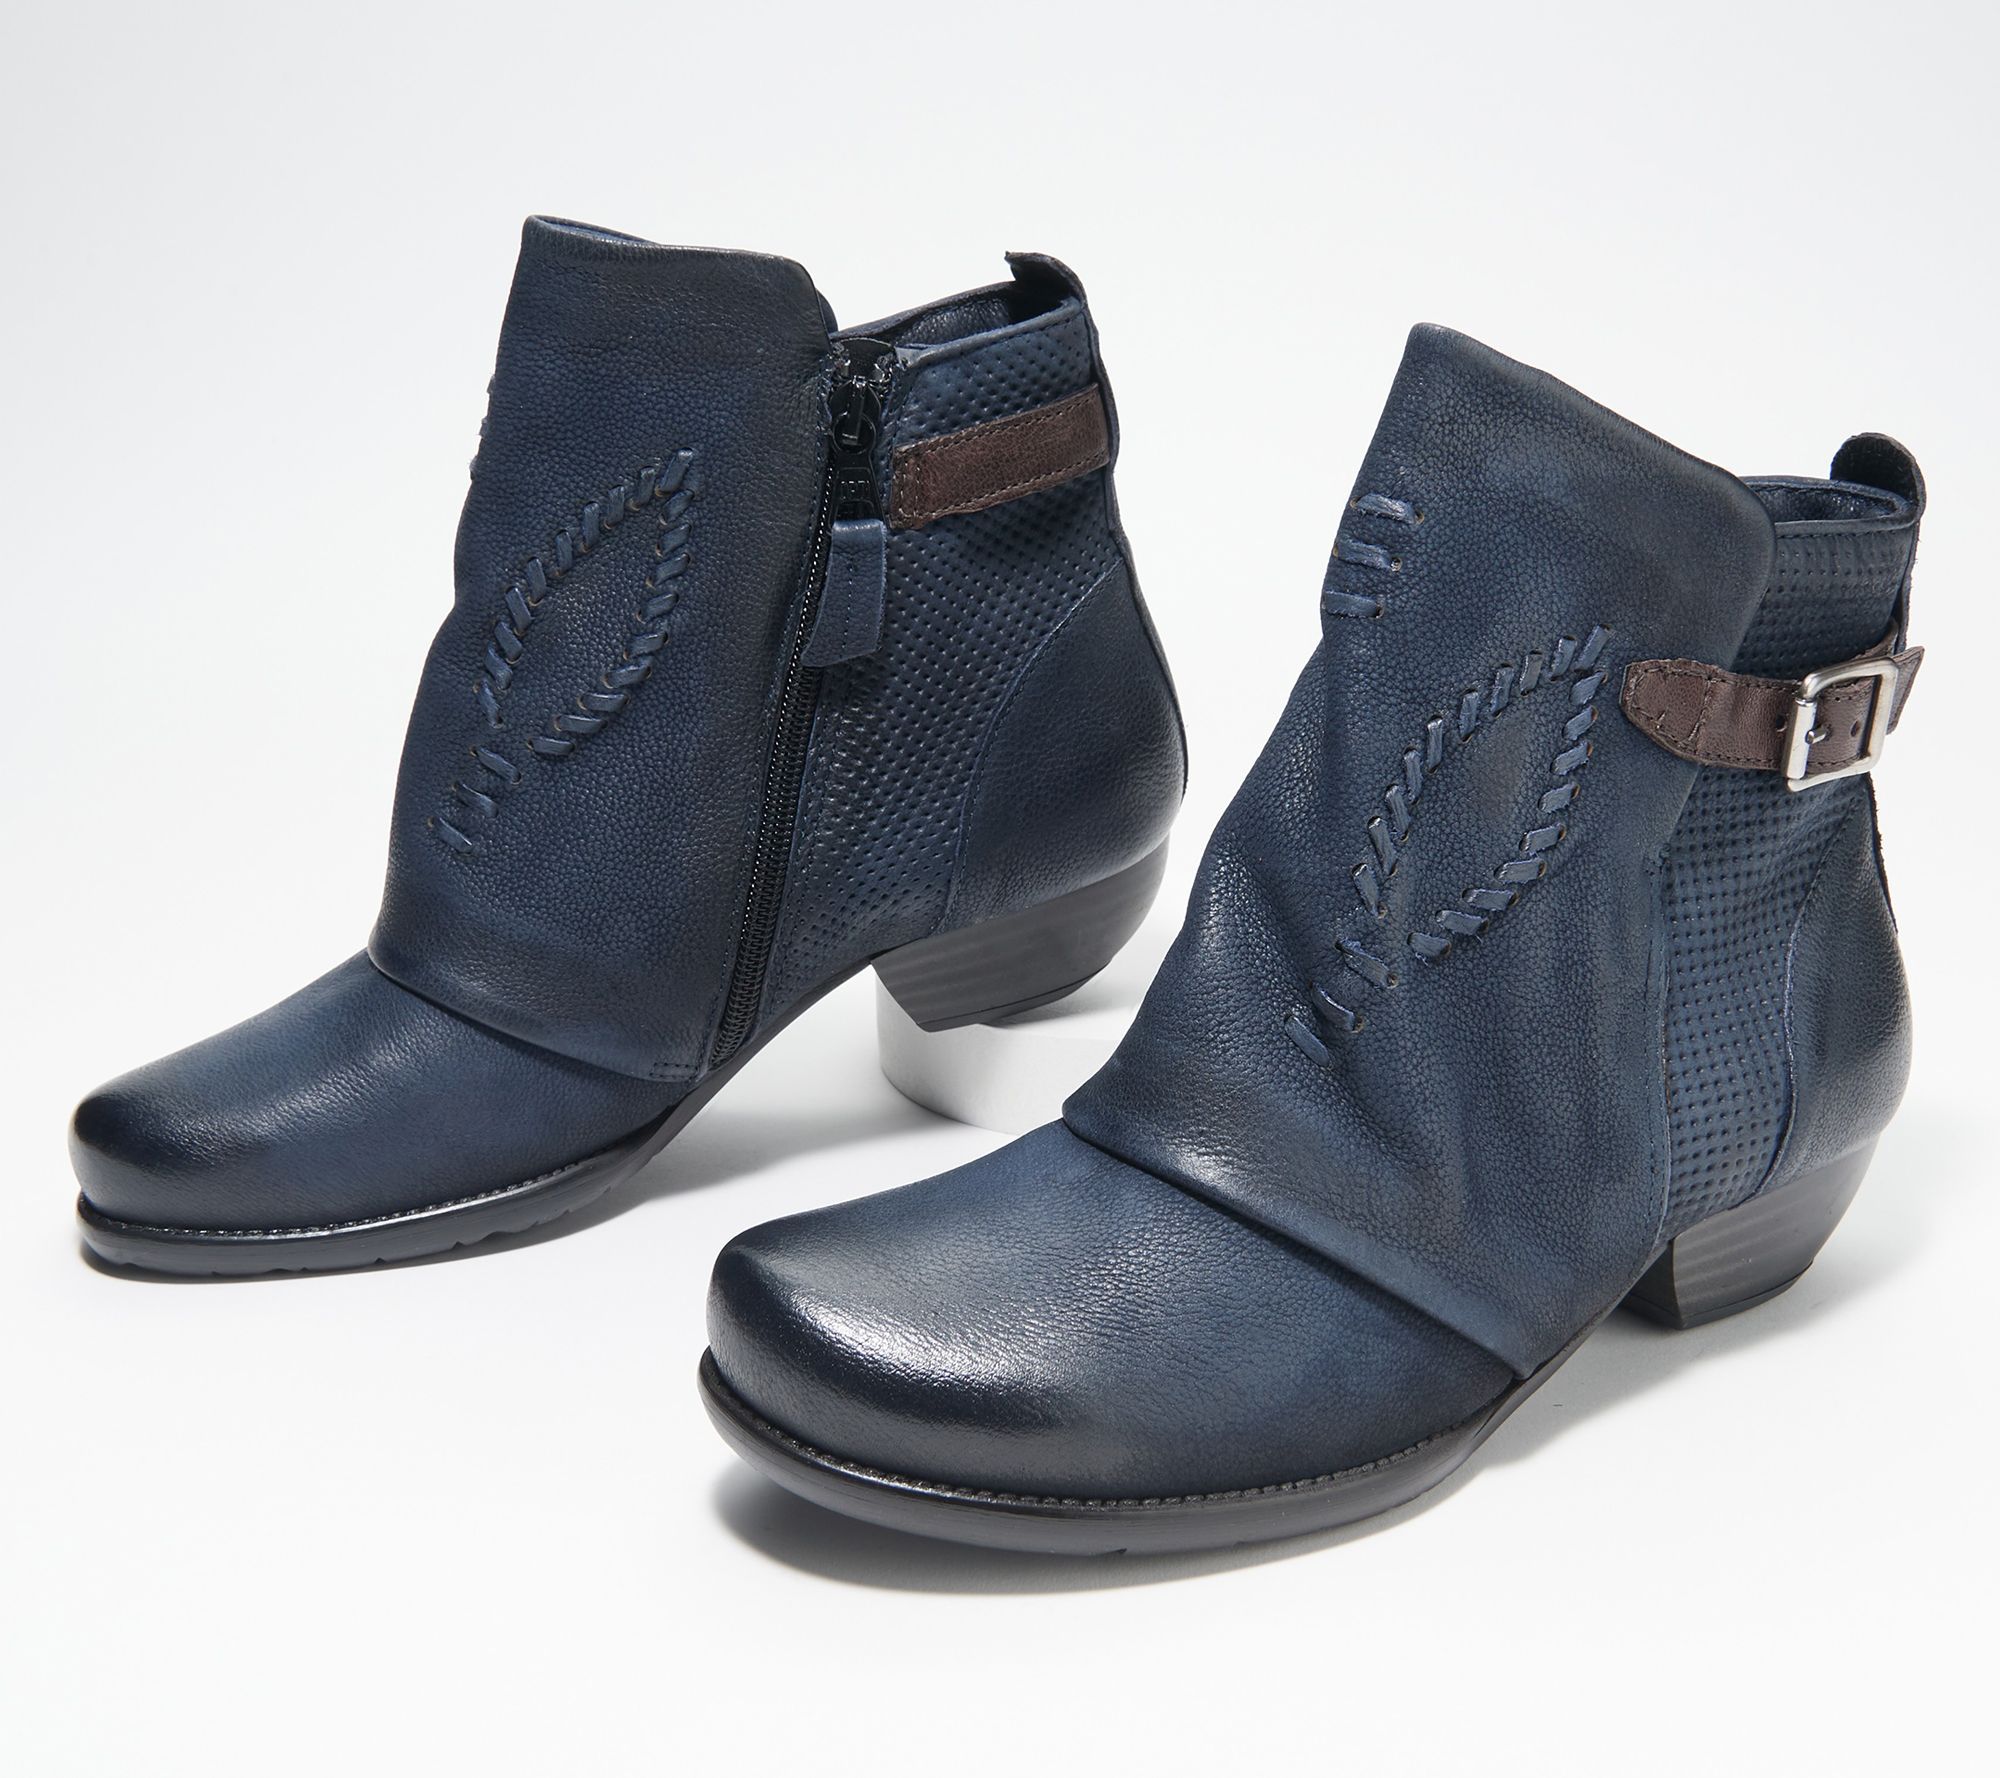 Miz Mooz Leather Whip Stitch Ankle Boots -Lynda, Size EU 40(US 9-9.5), Brandy